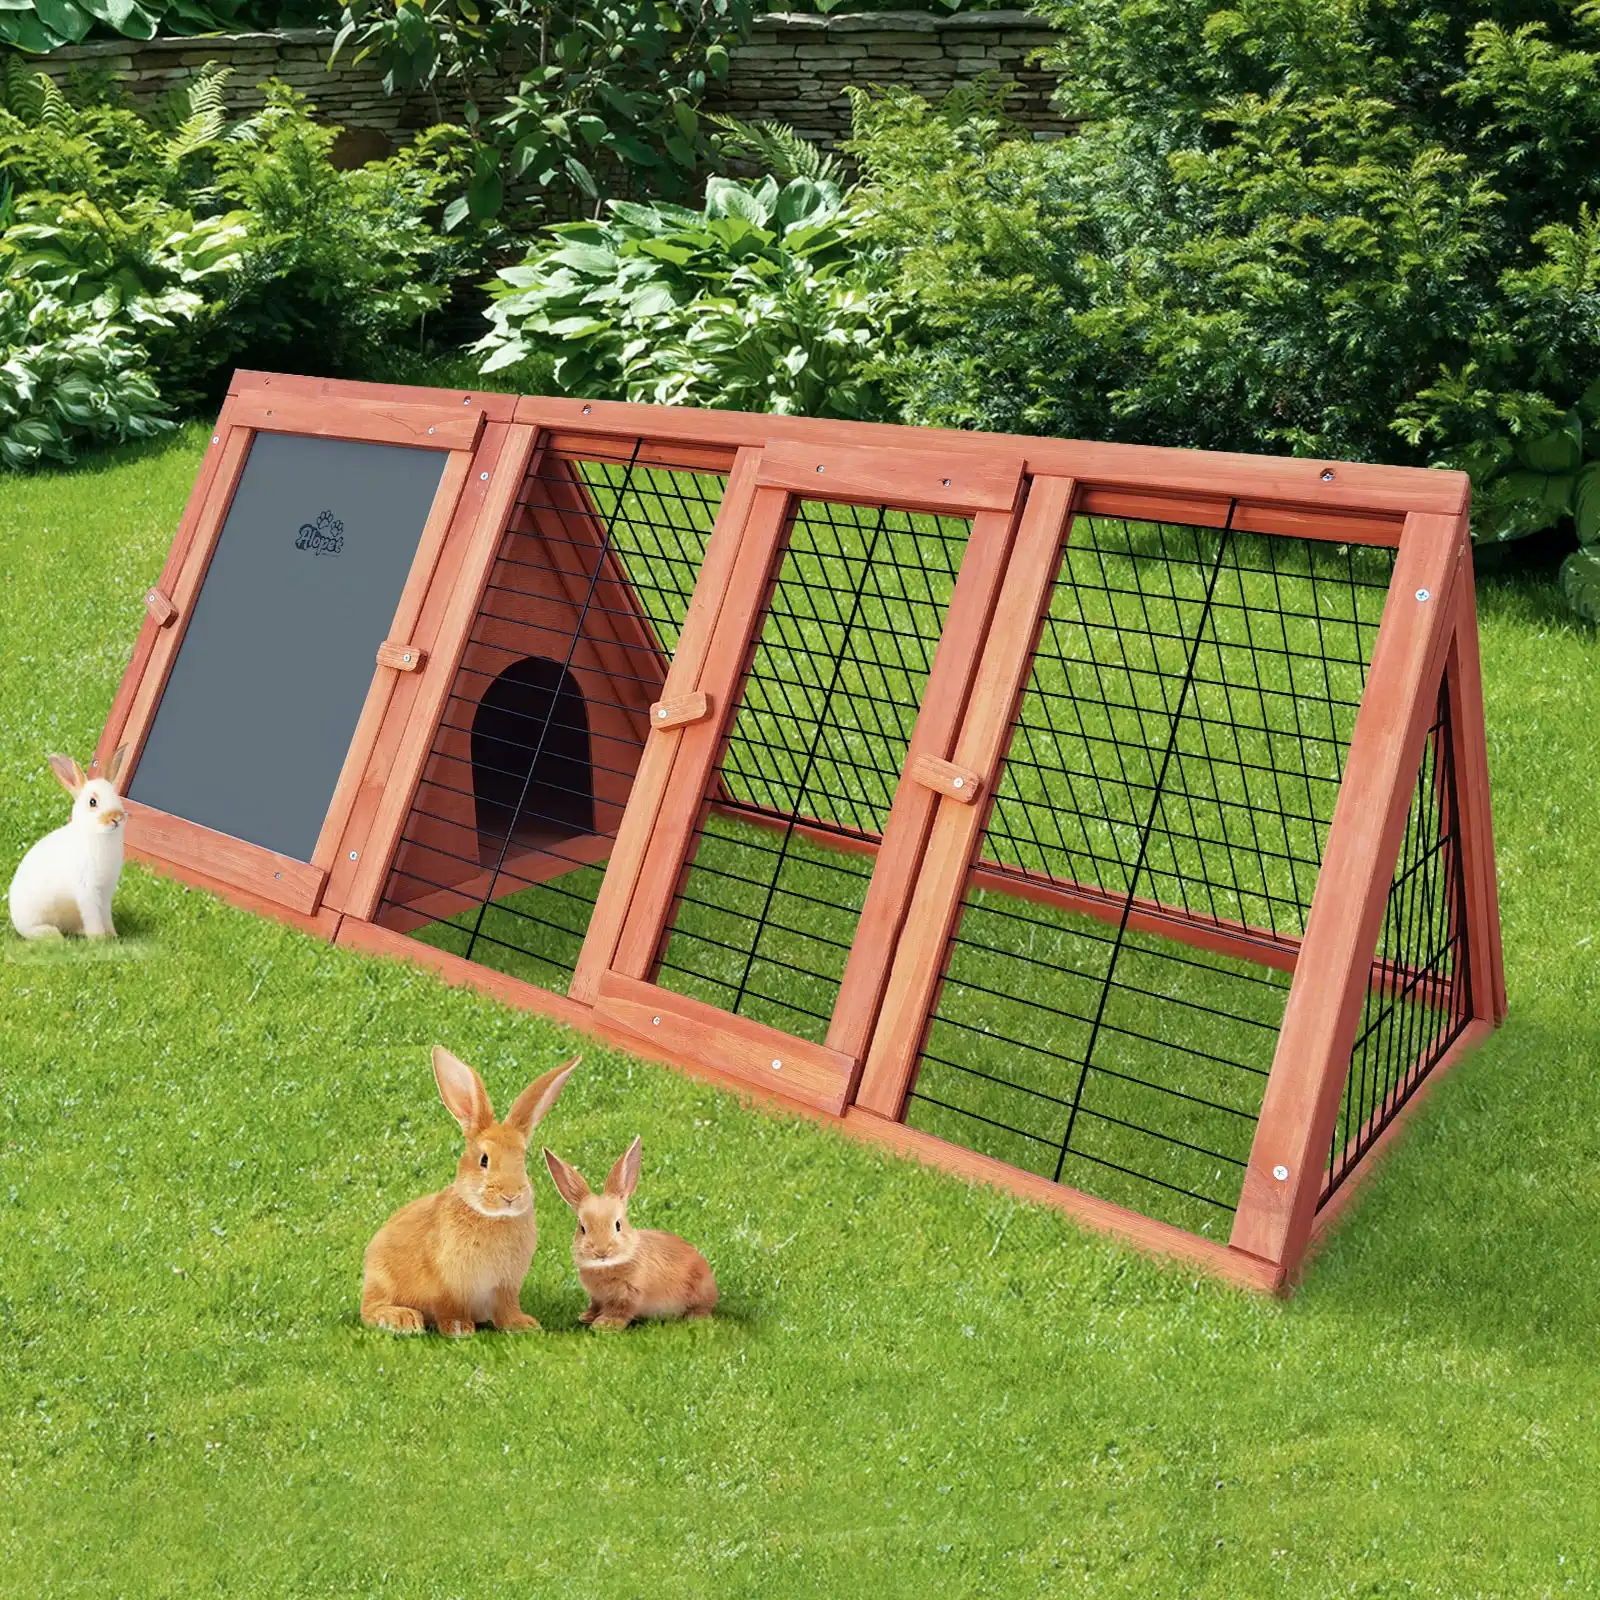 Alopet Rabbit Hutch Bunny House Run Cage Chicken Coop Wooden Outdoor Pet Hutch